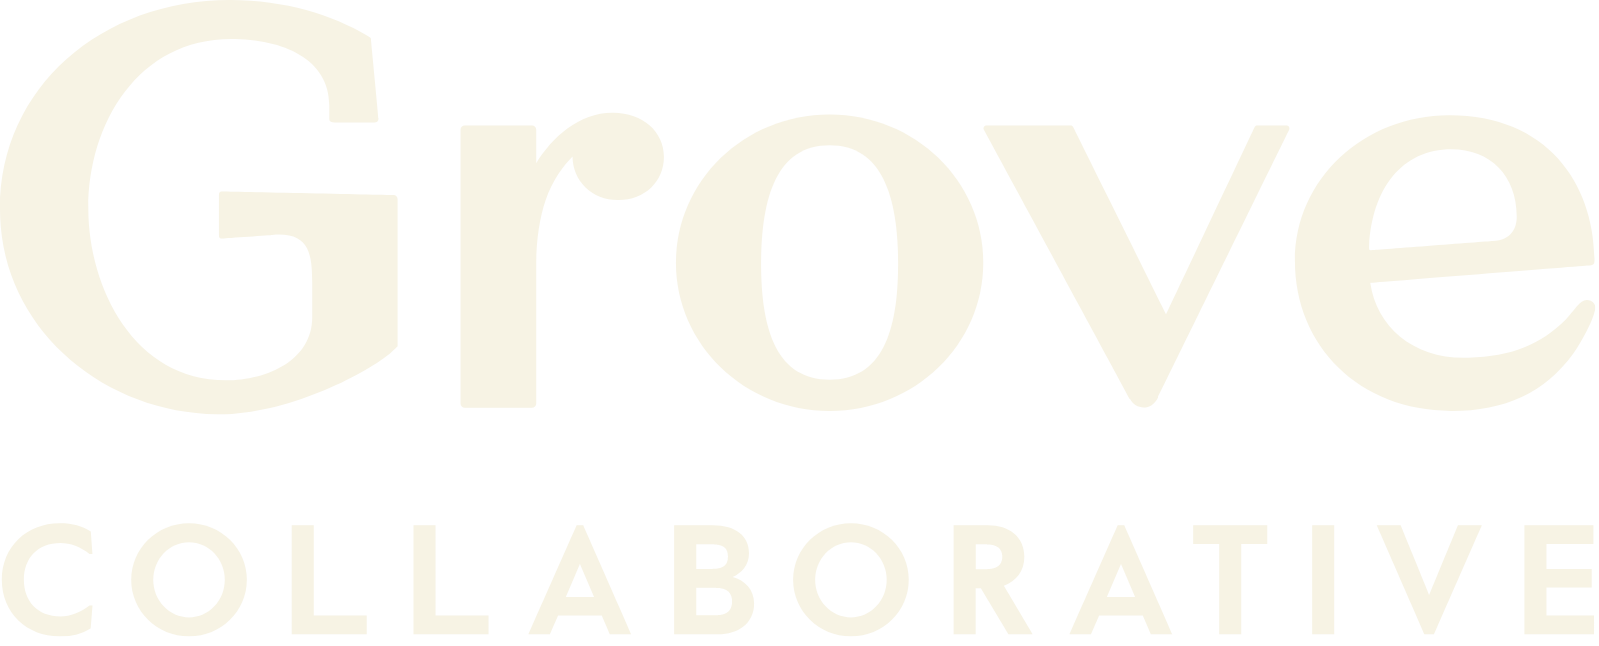 Grove Collaborative logo large for dark backgrounds (transparent PNG)